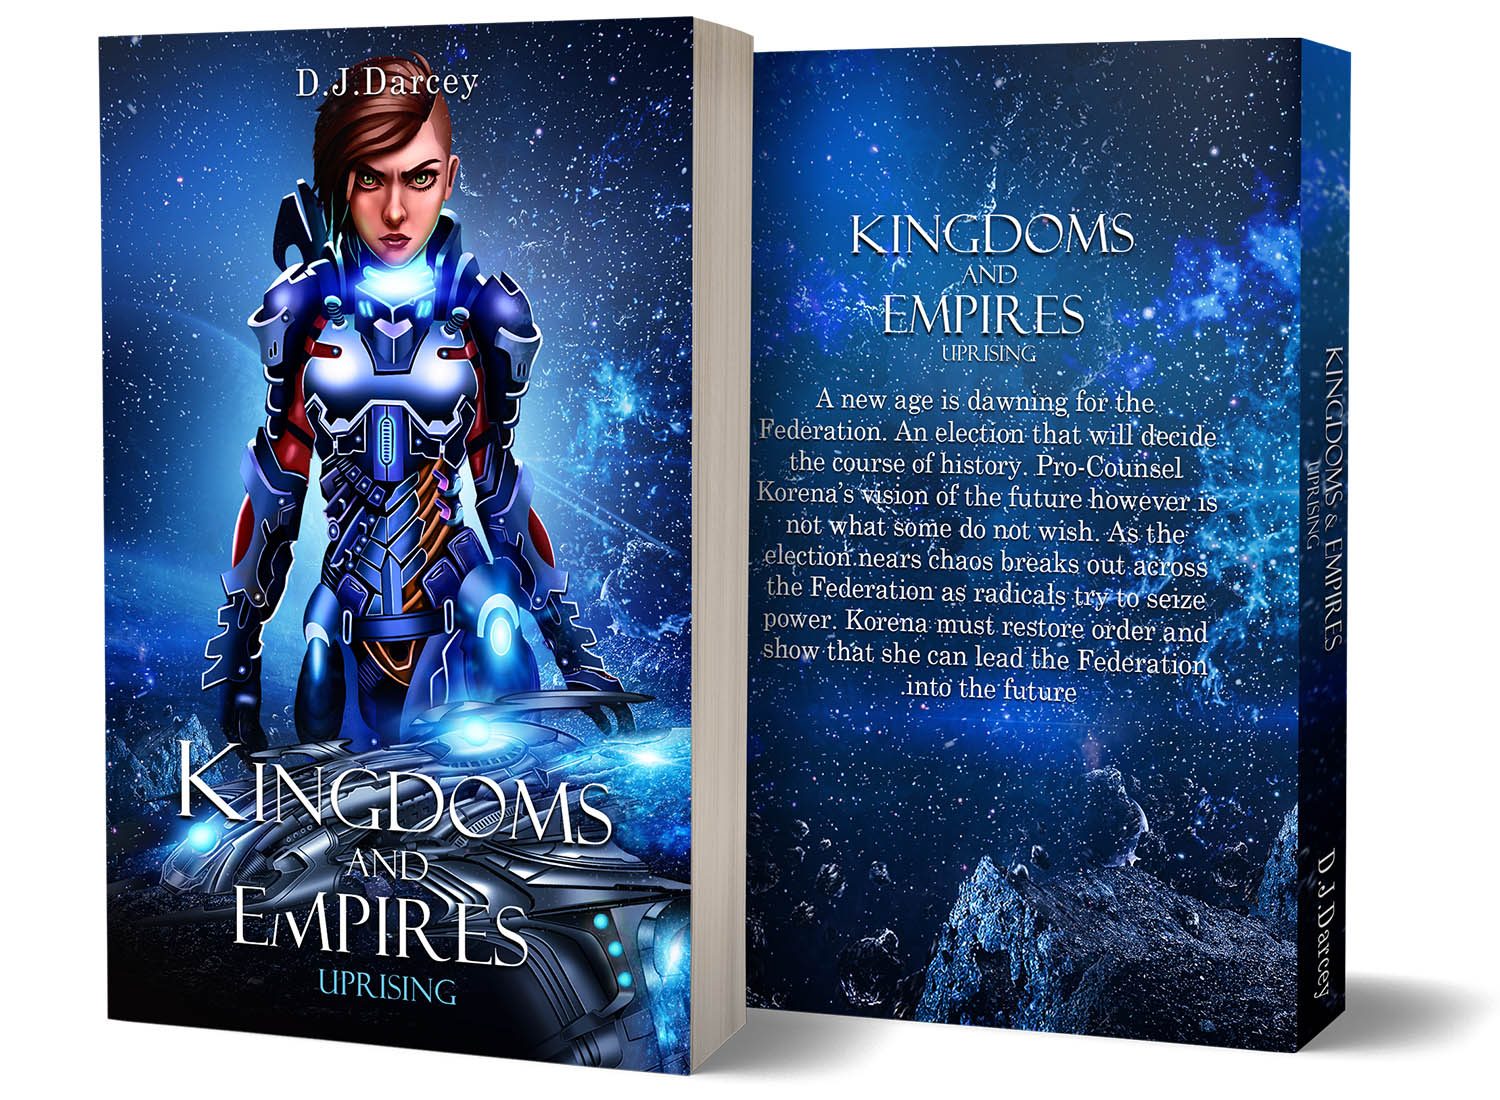 bookconsilio-portfolio-kingdomes-and-empires-uprising-paperback-bookcoverdesign